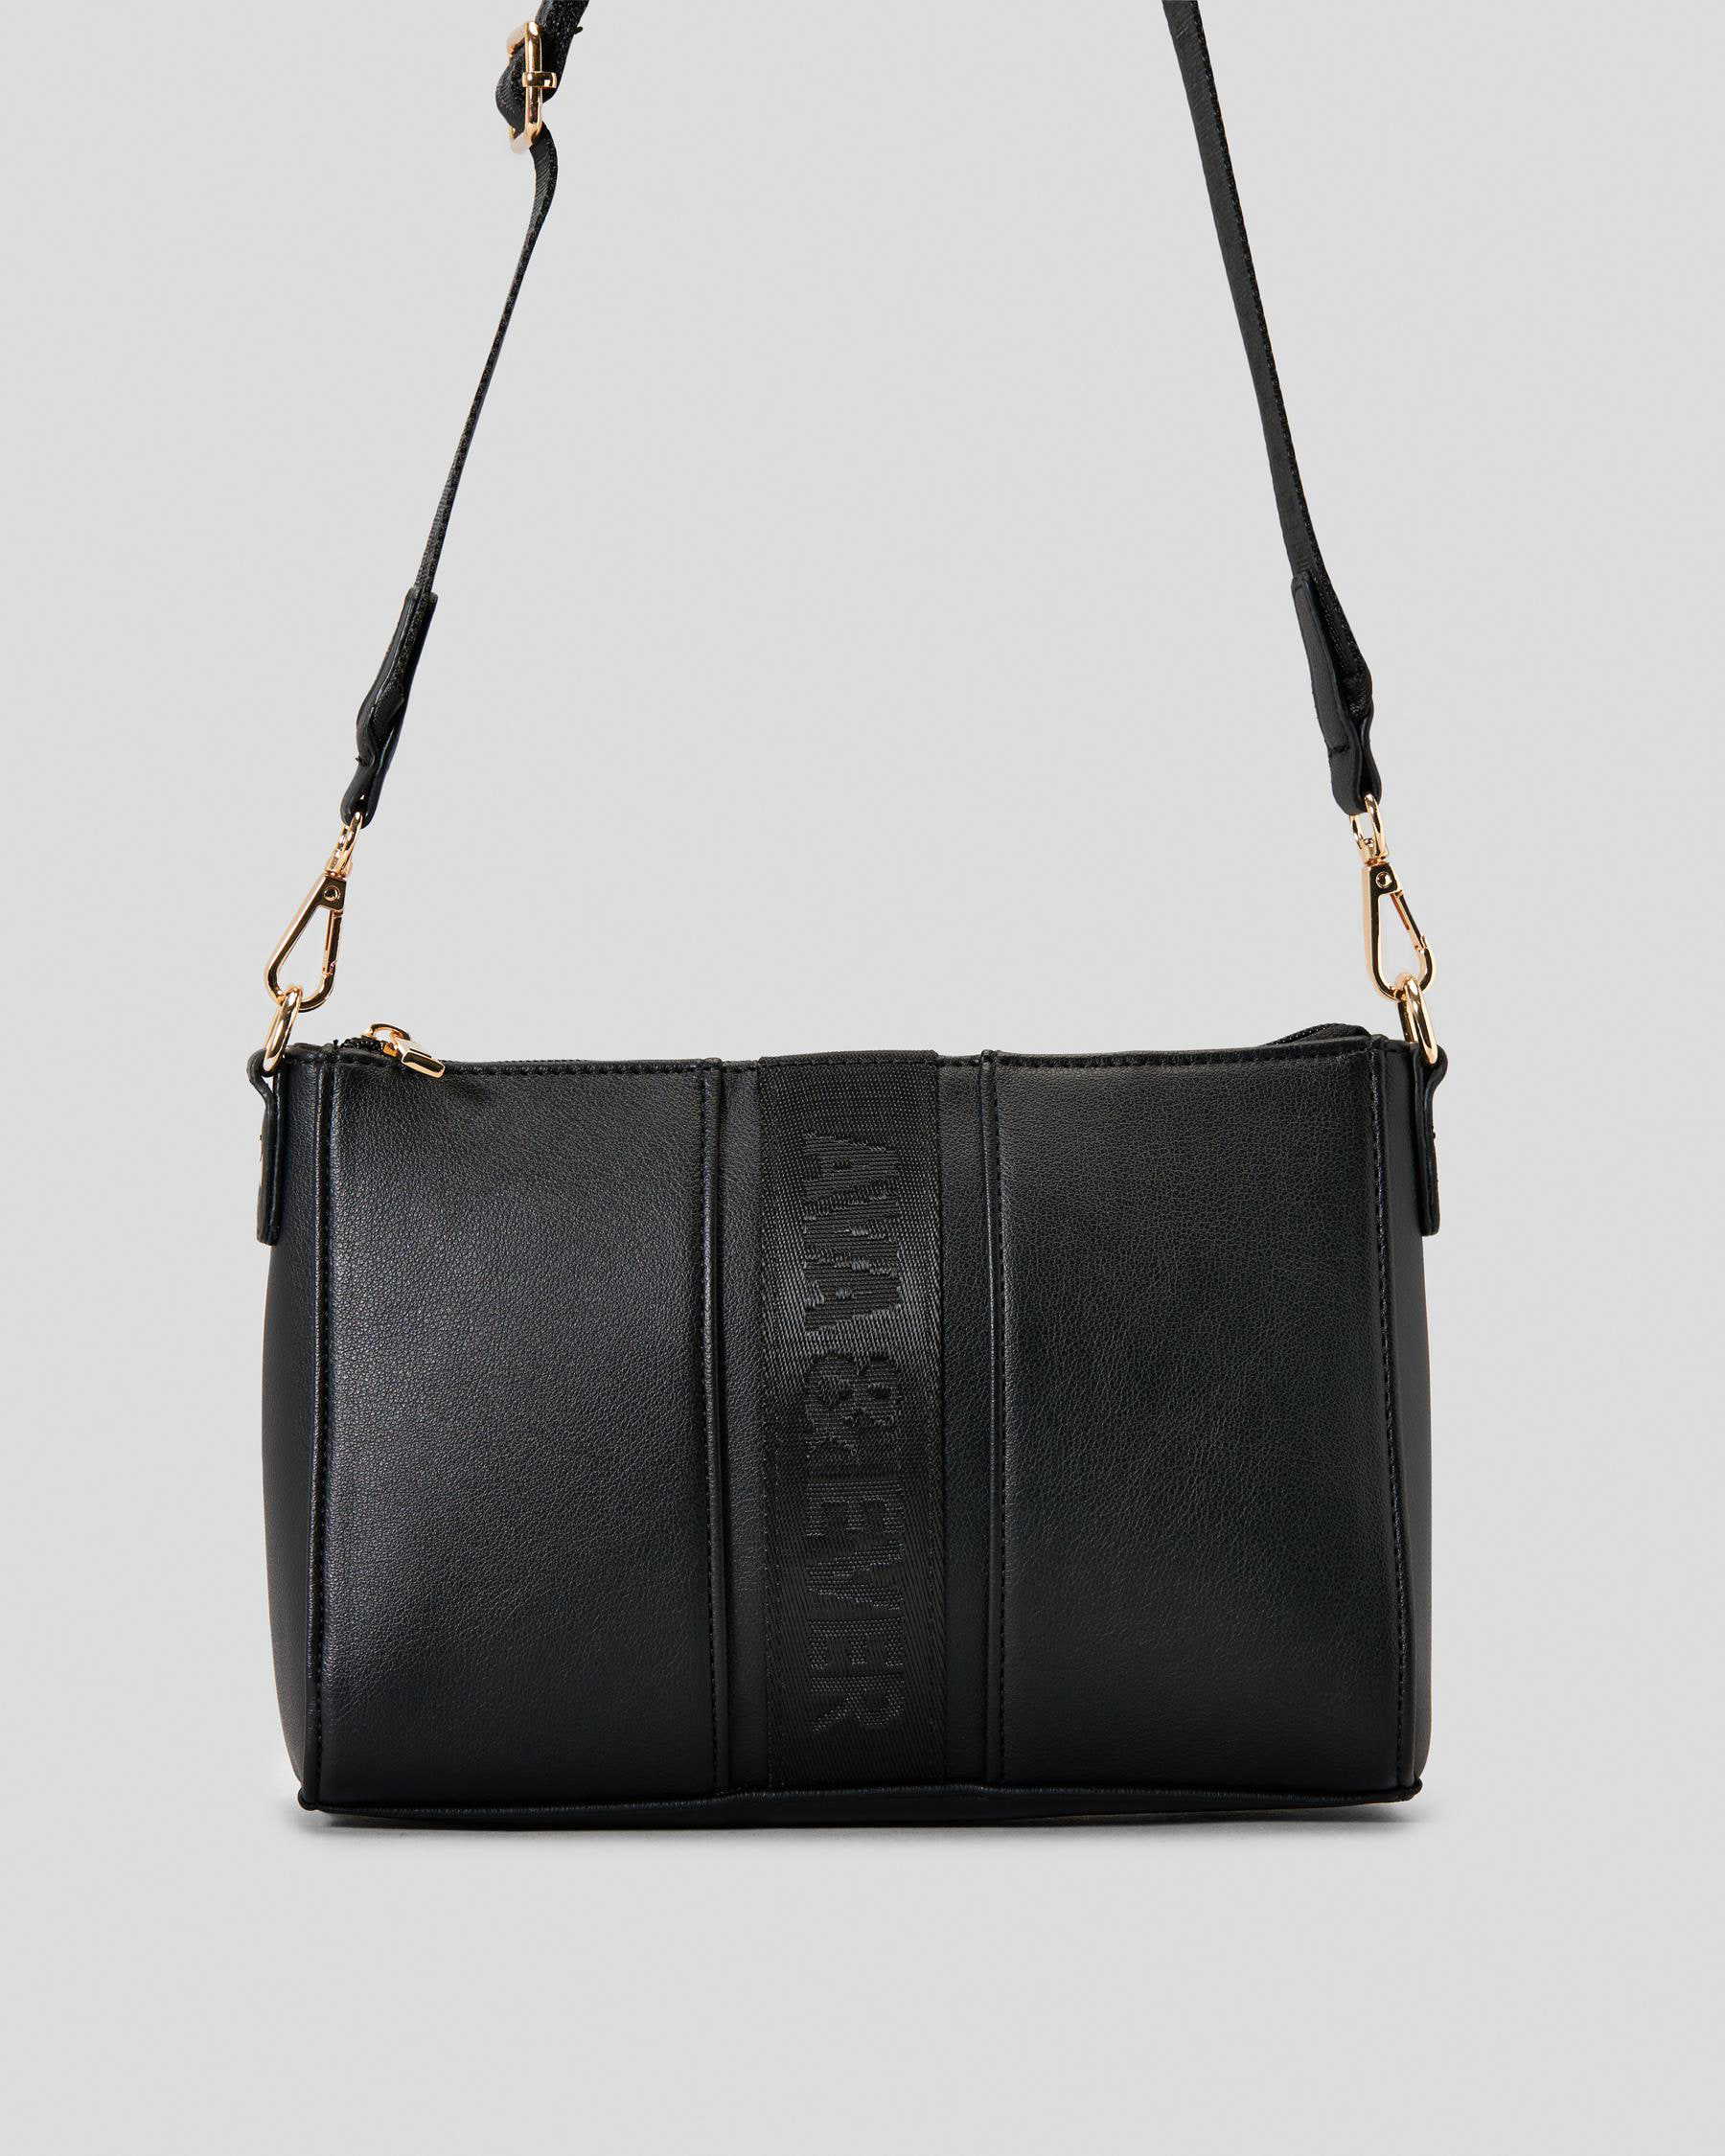 Shop Ava And Ever Rinee Handbag In Black/black - Fast Shipping & Easy ...